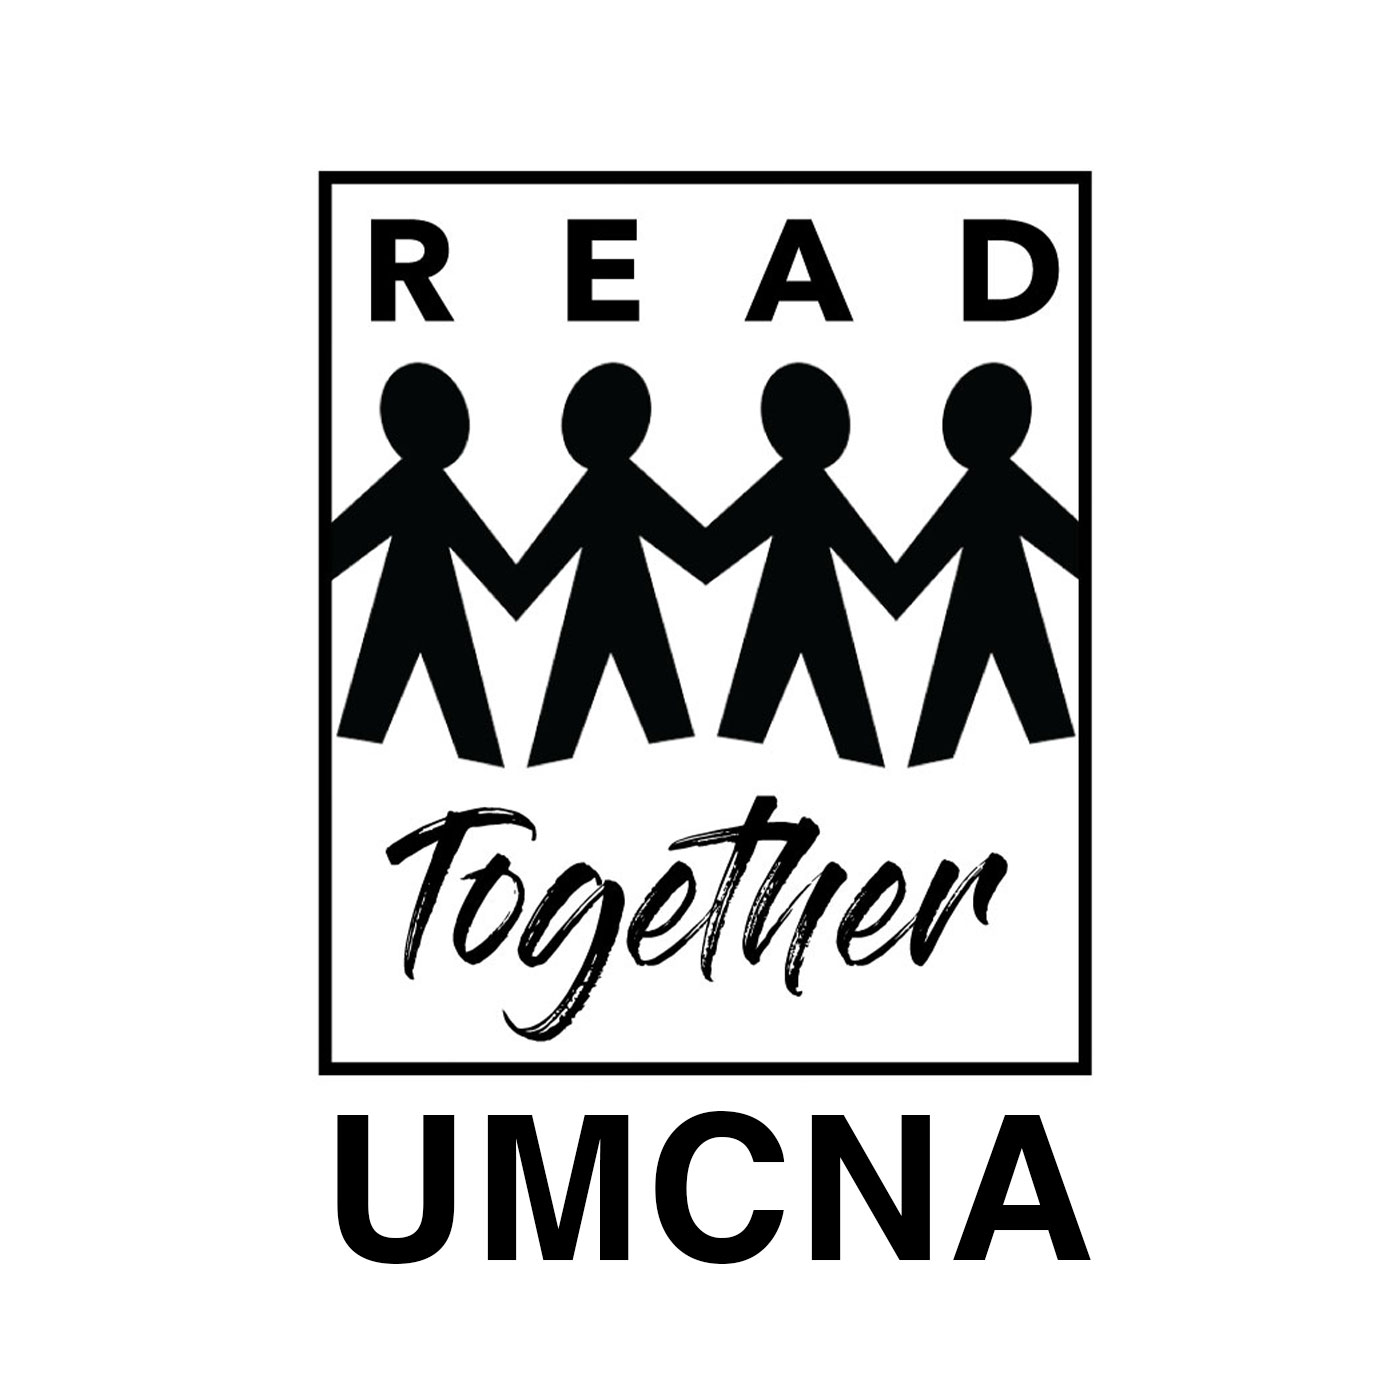 Read Together UMCNA